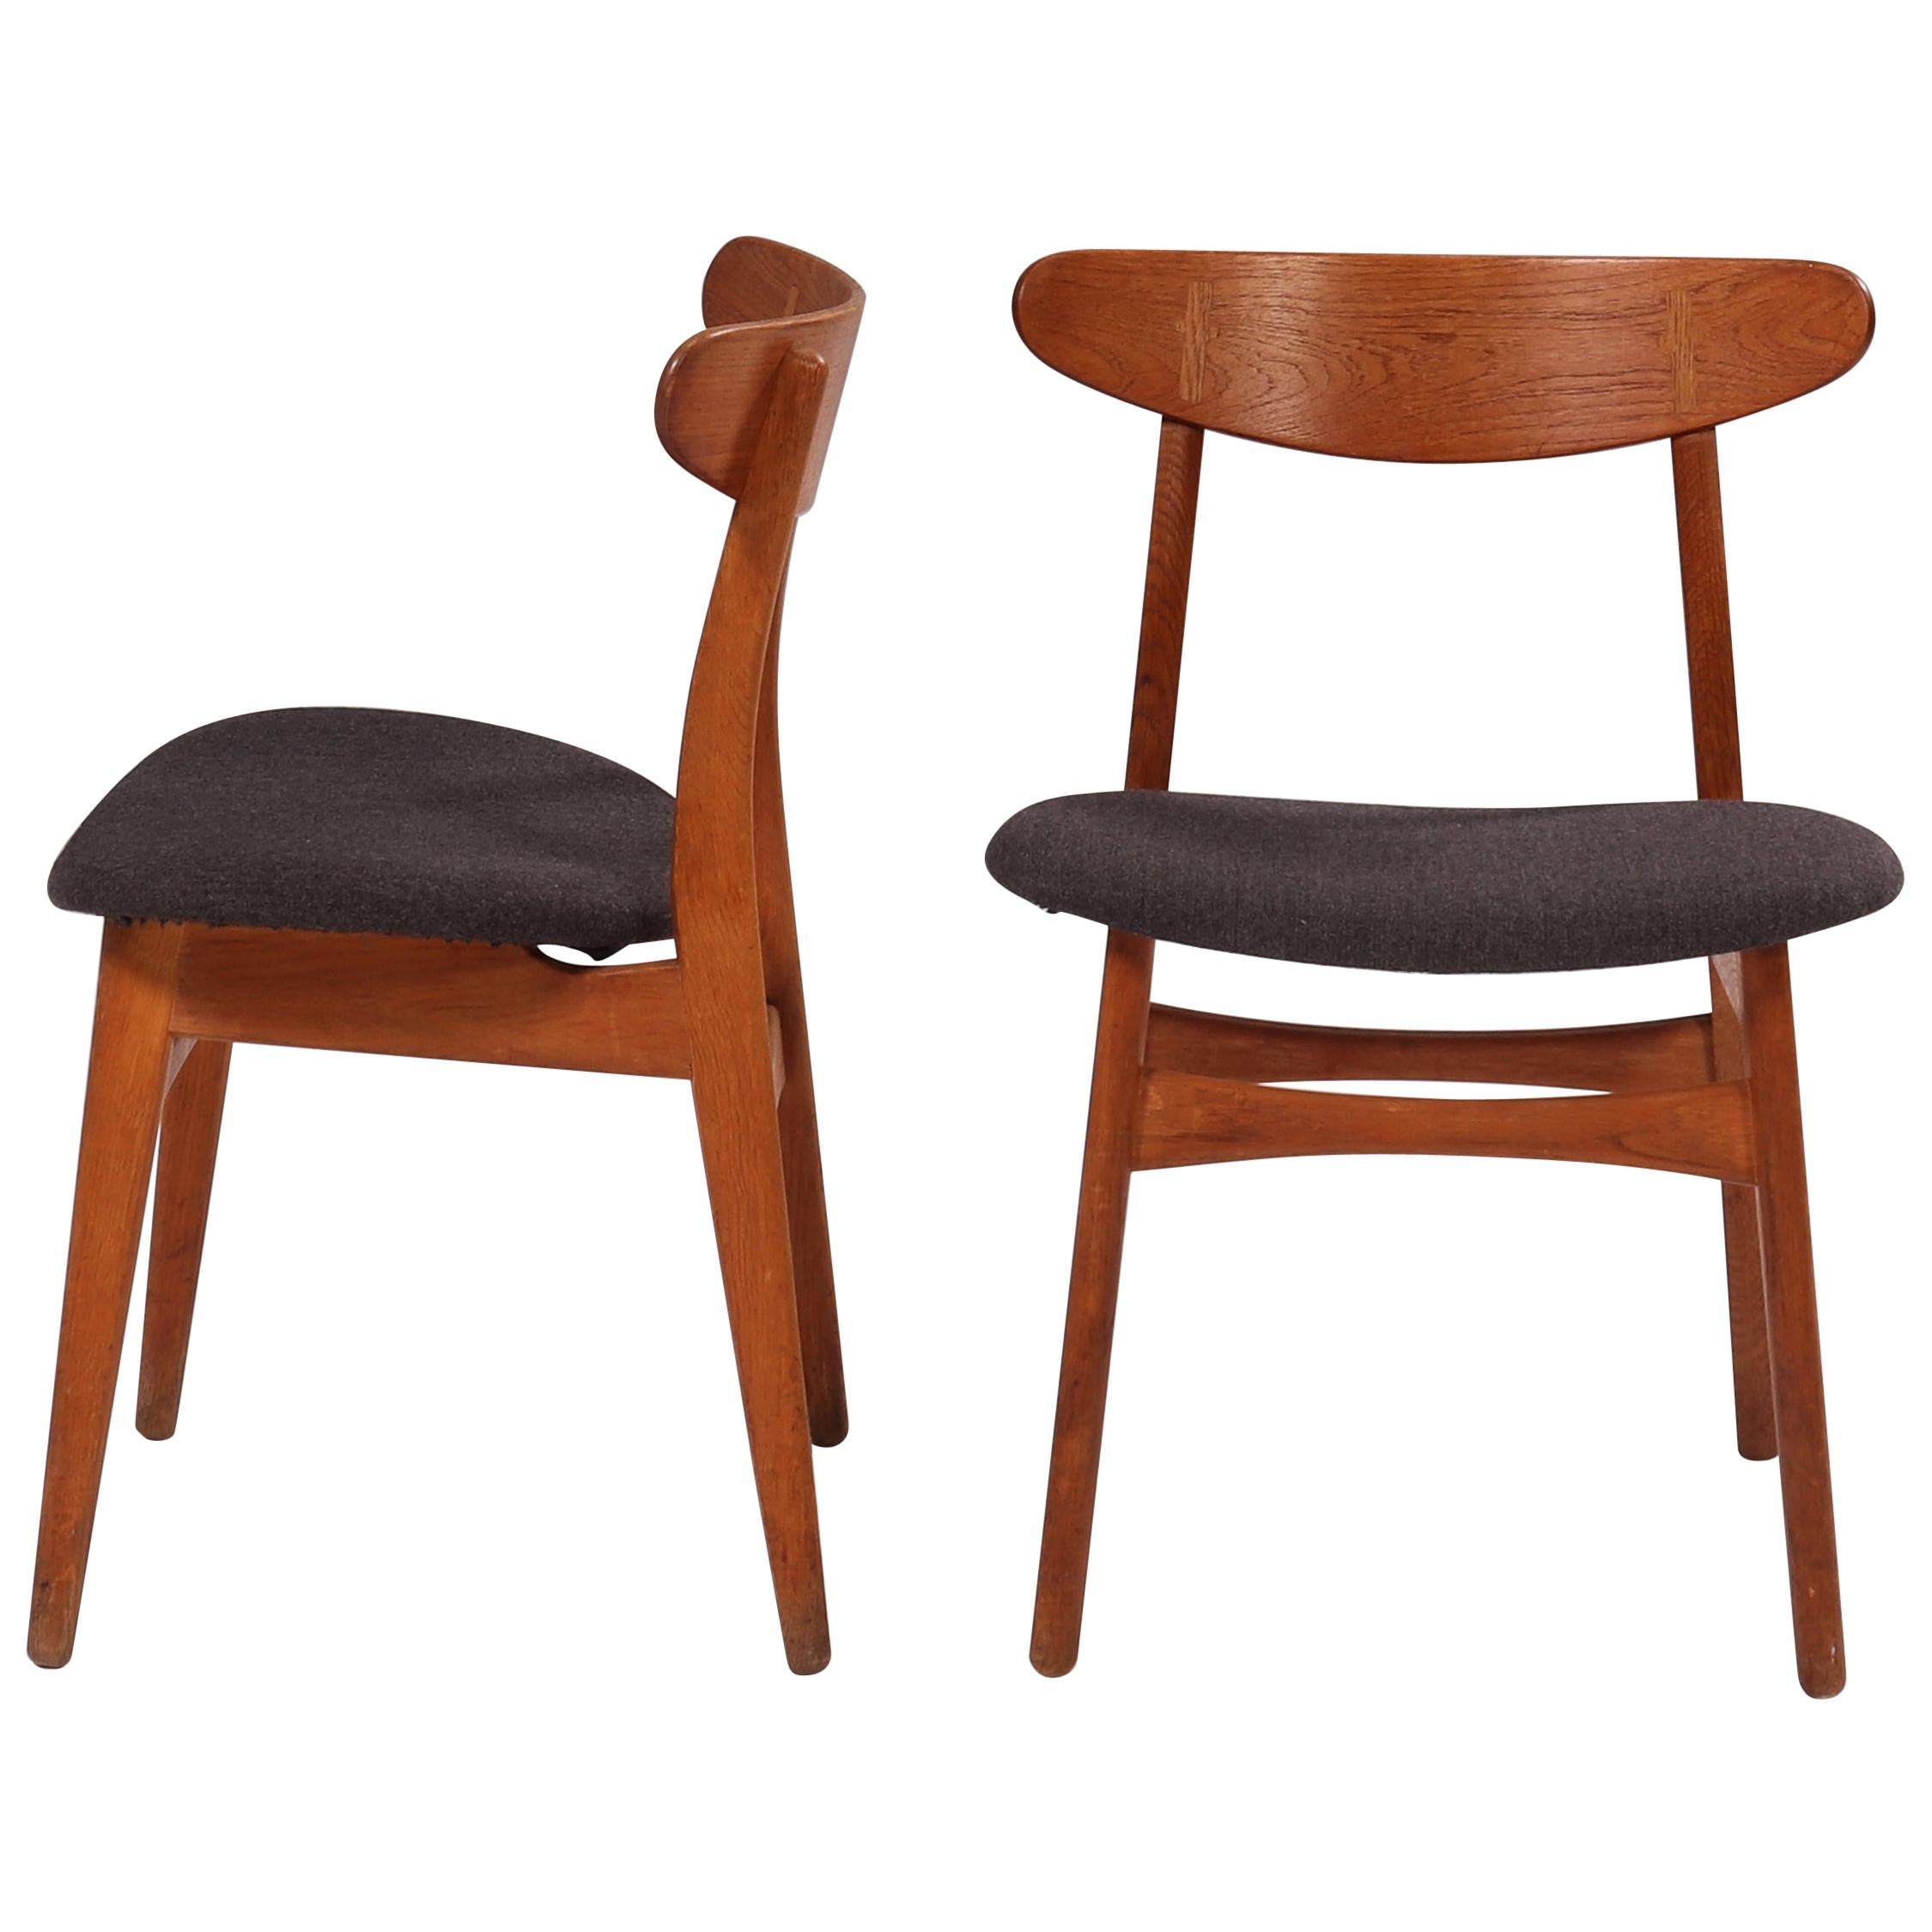 Hans J. Wegner for Carl Hansesn & Søn CH30P Dining Chairs, Set of 2